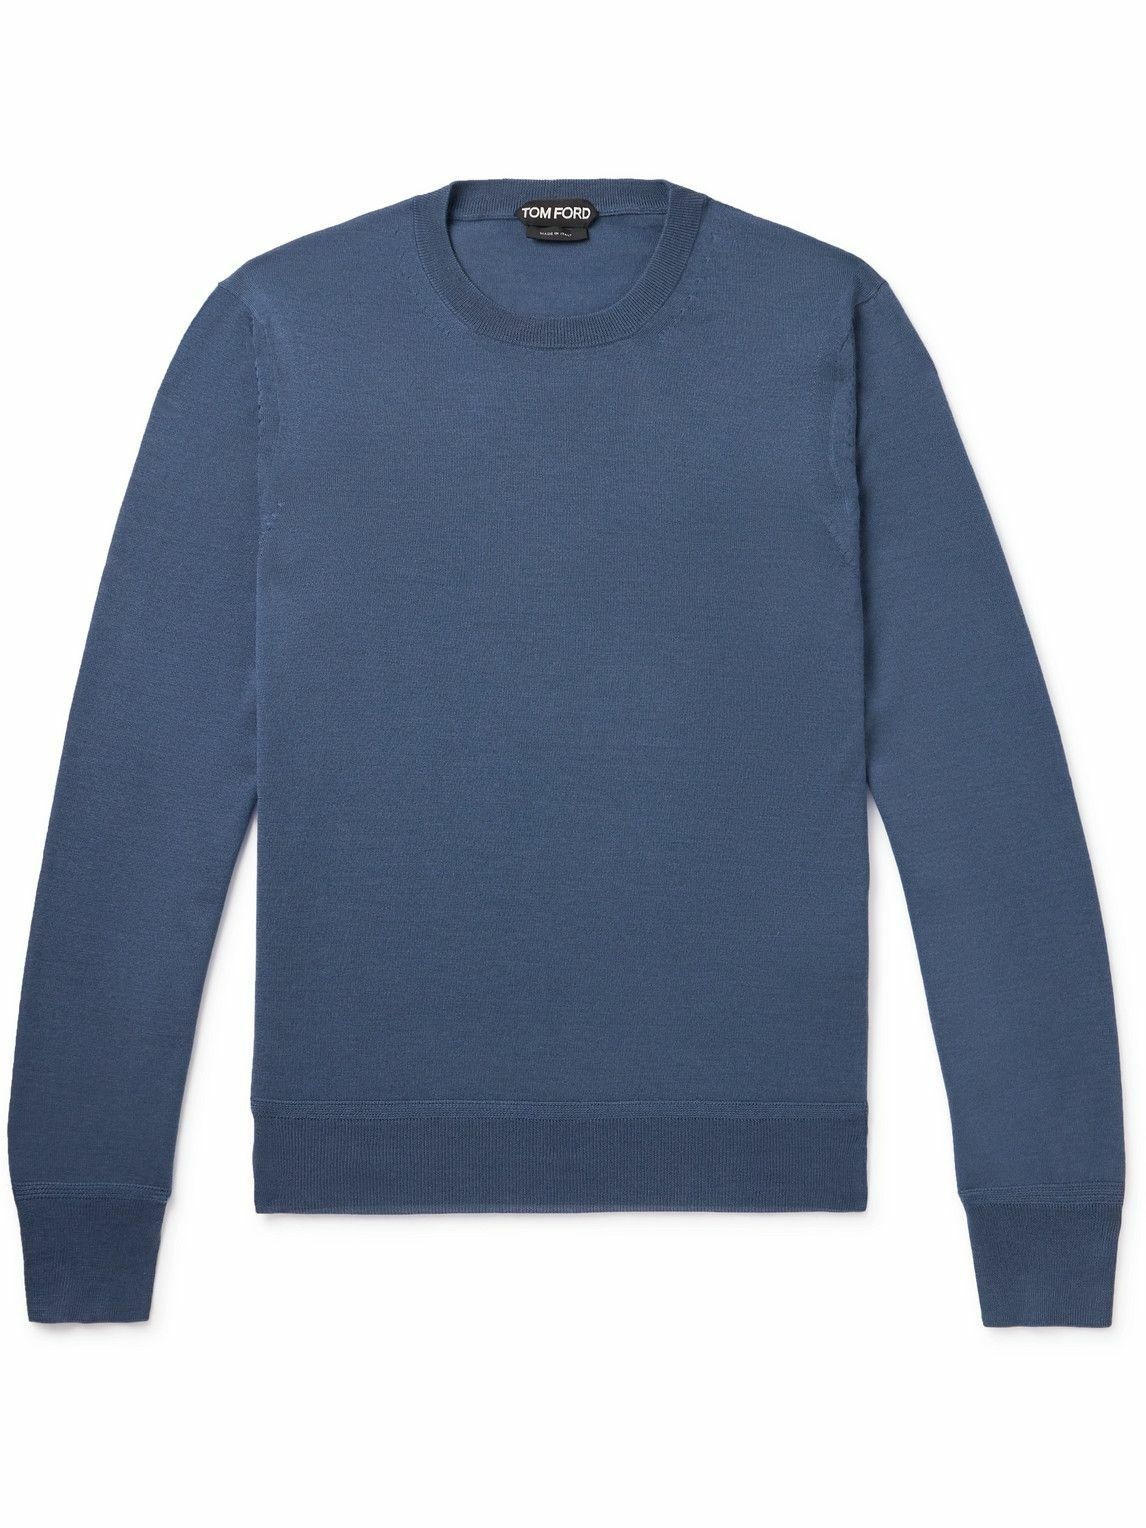 TOM FORD - Slim-Fit Cashmere Silk-Blend Sweater - Blue TOM FORD